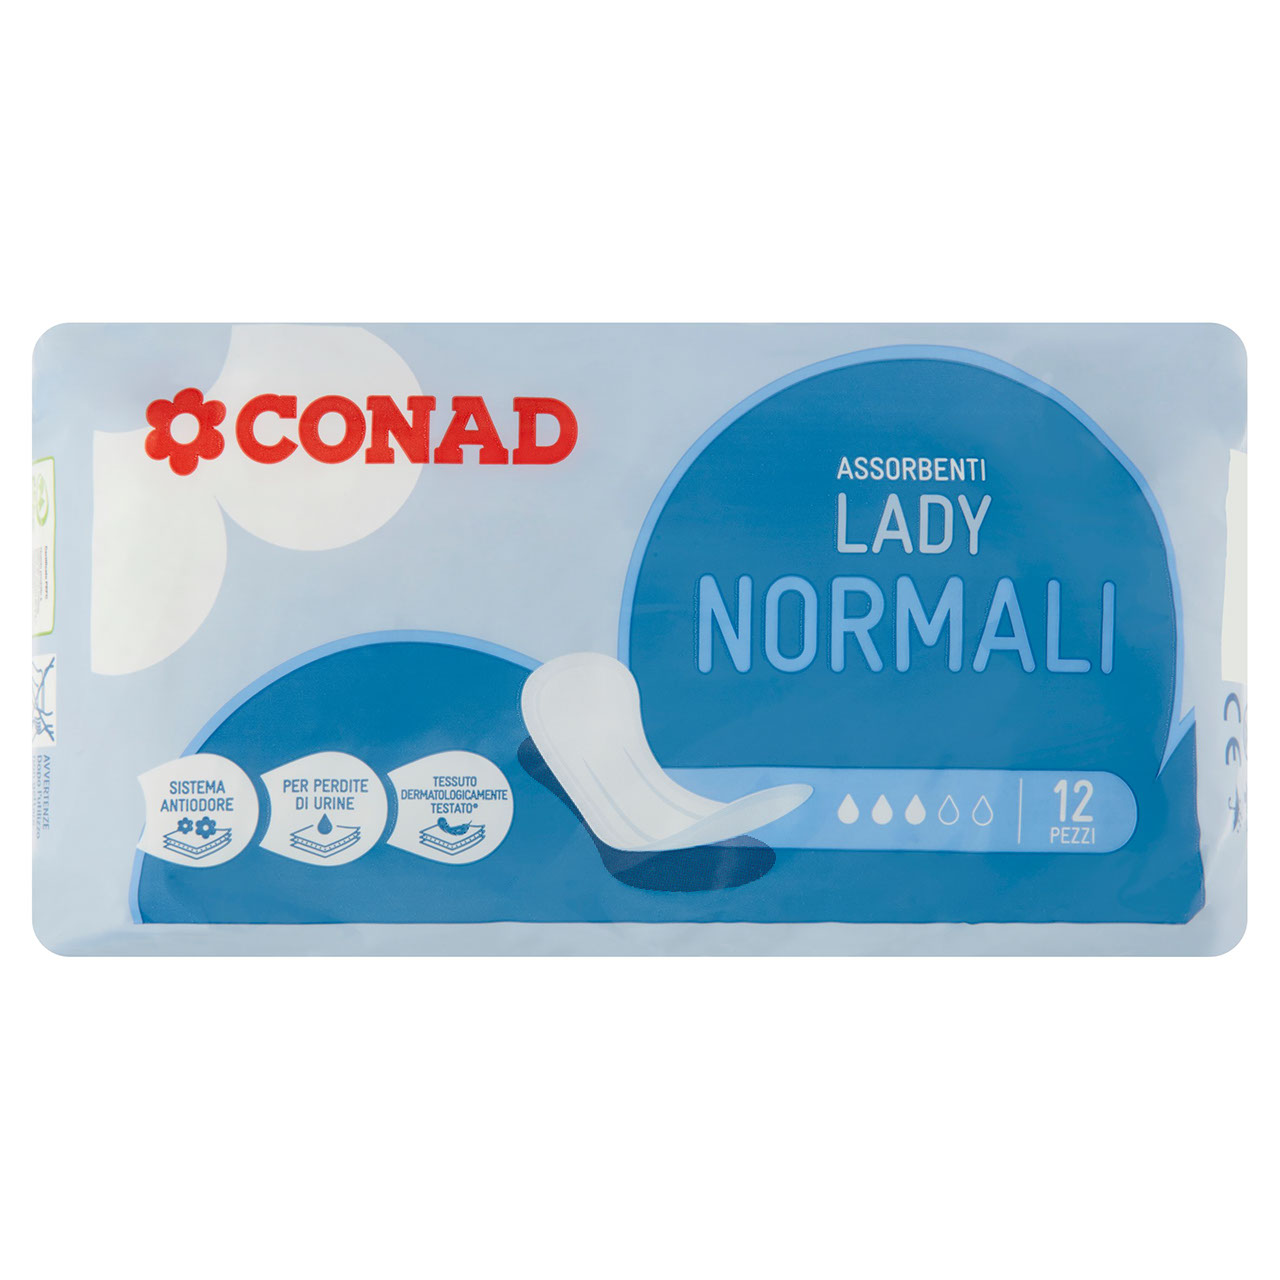 Assorbenti Lady Normali 12 pz Conad vendita online